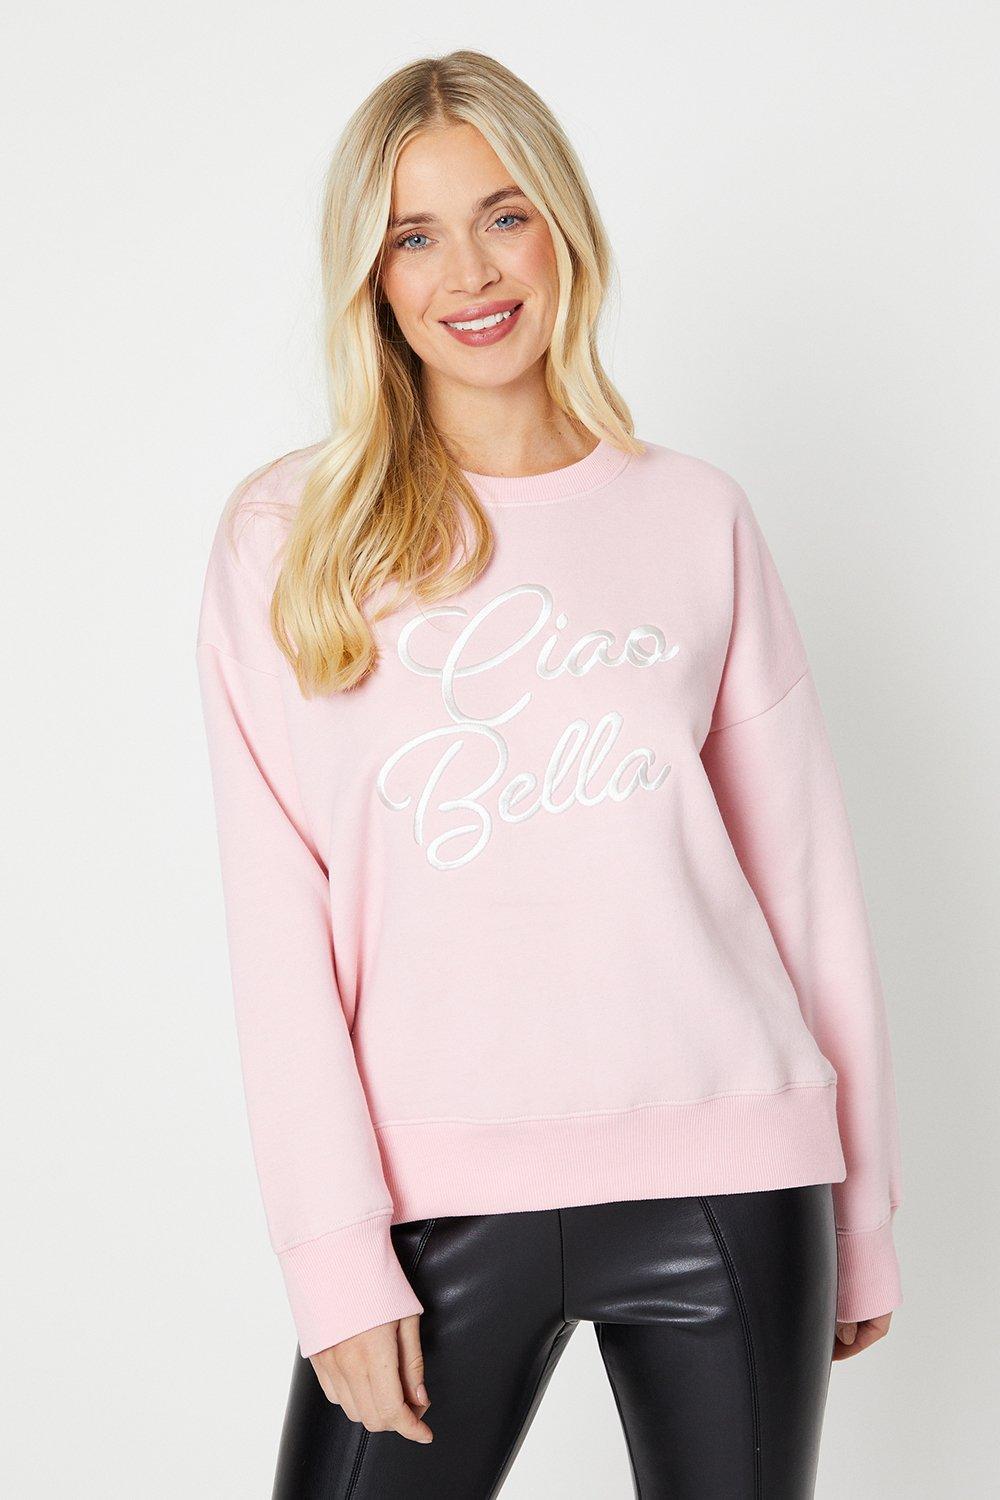 Women’s Petite Ciao Bella Sweatshirt - blush - XS